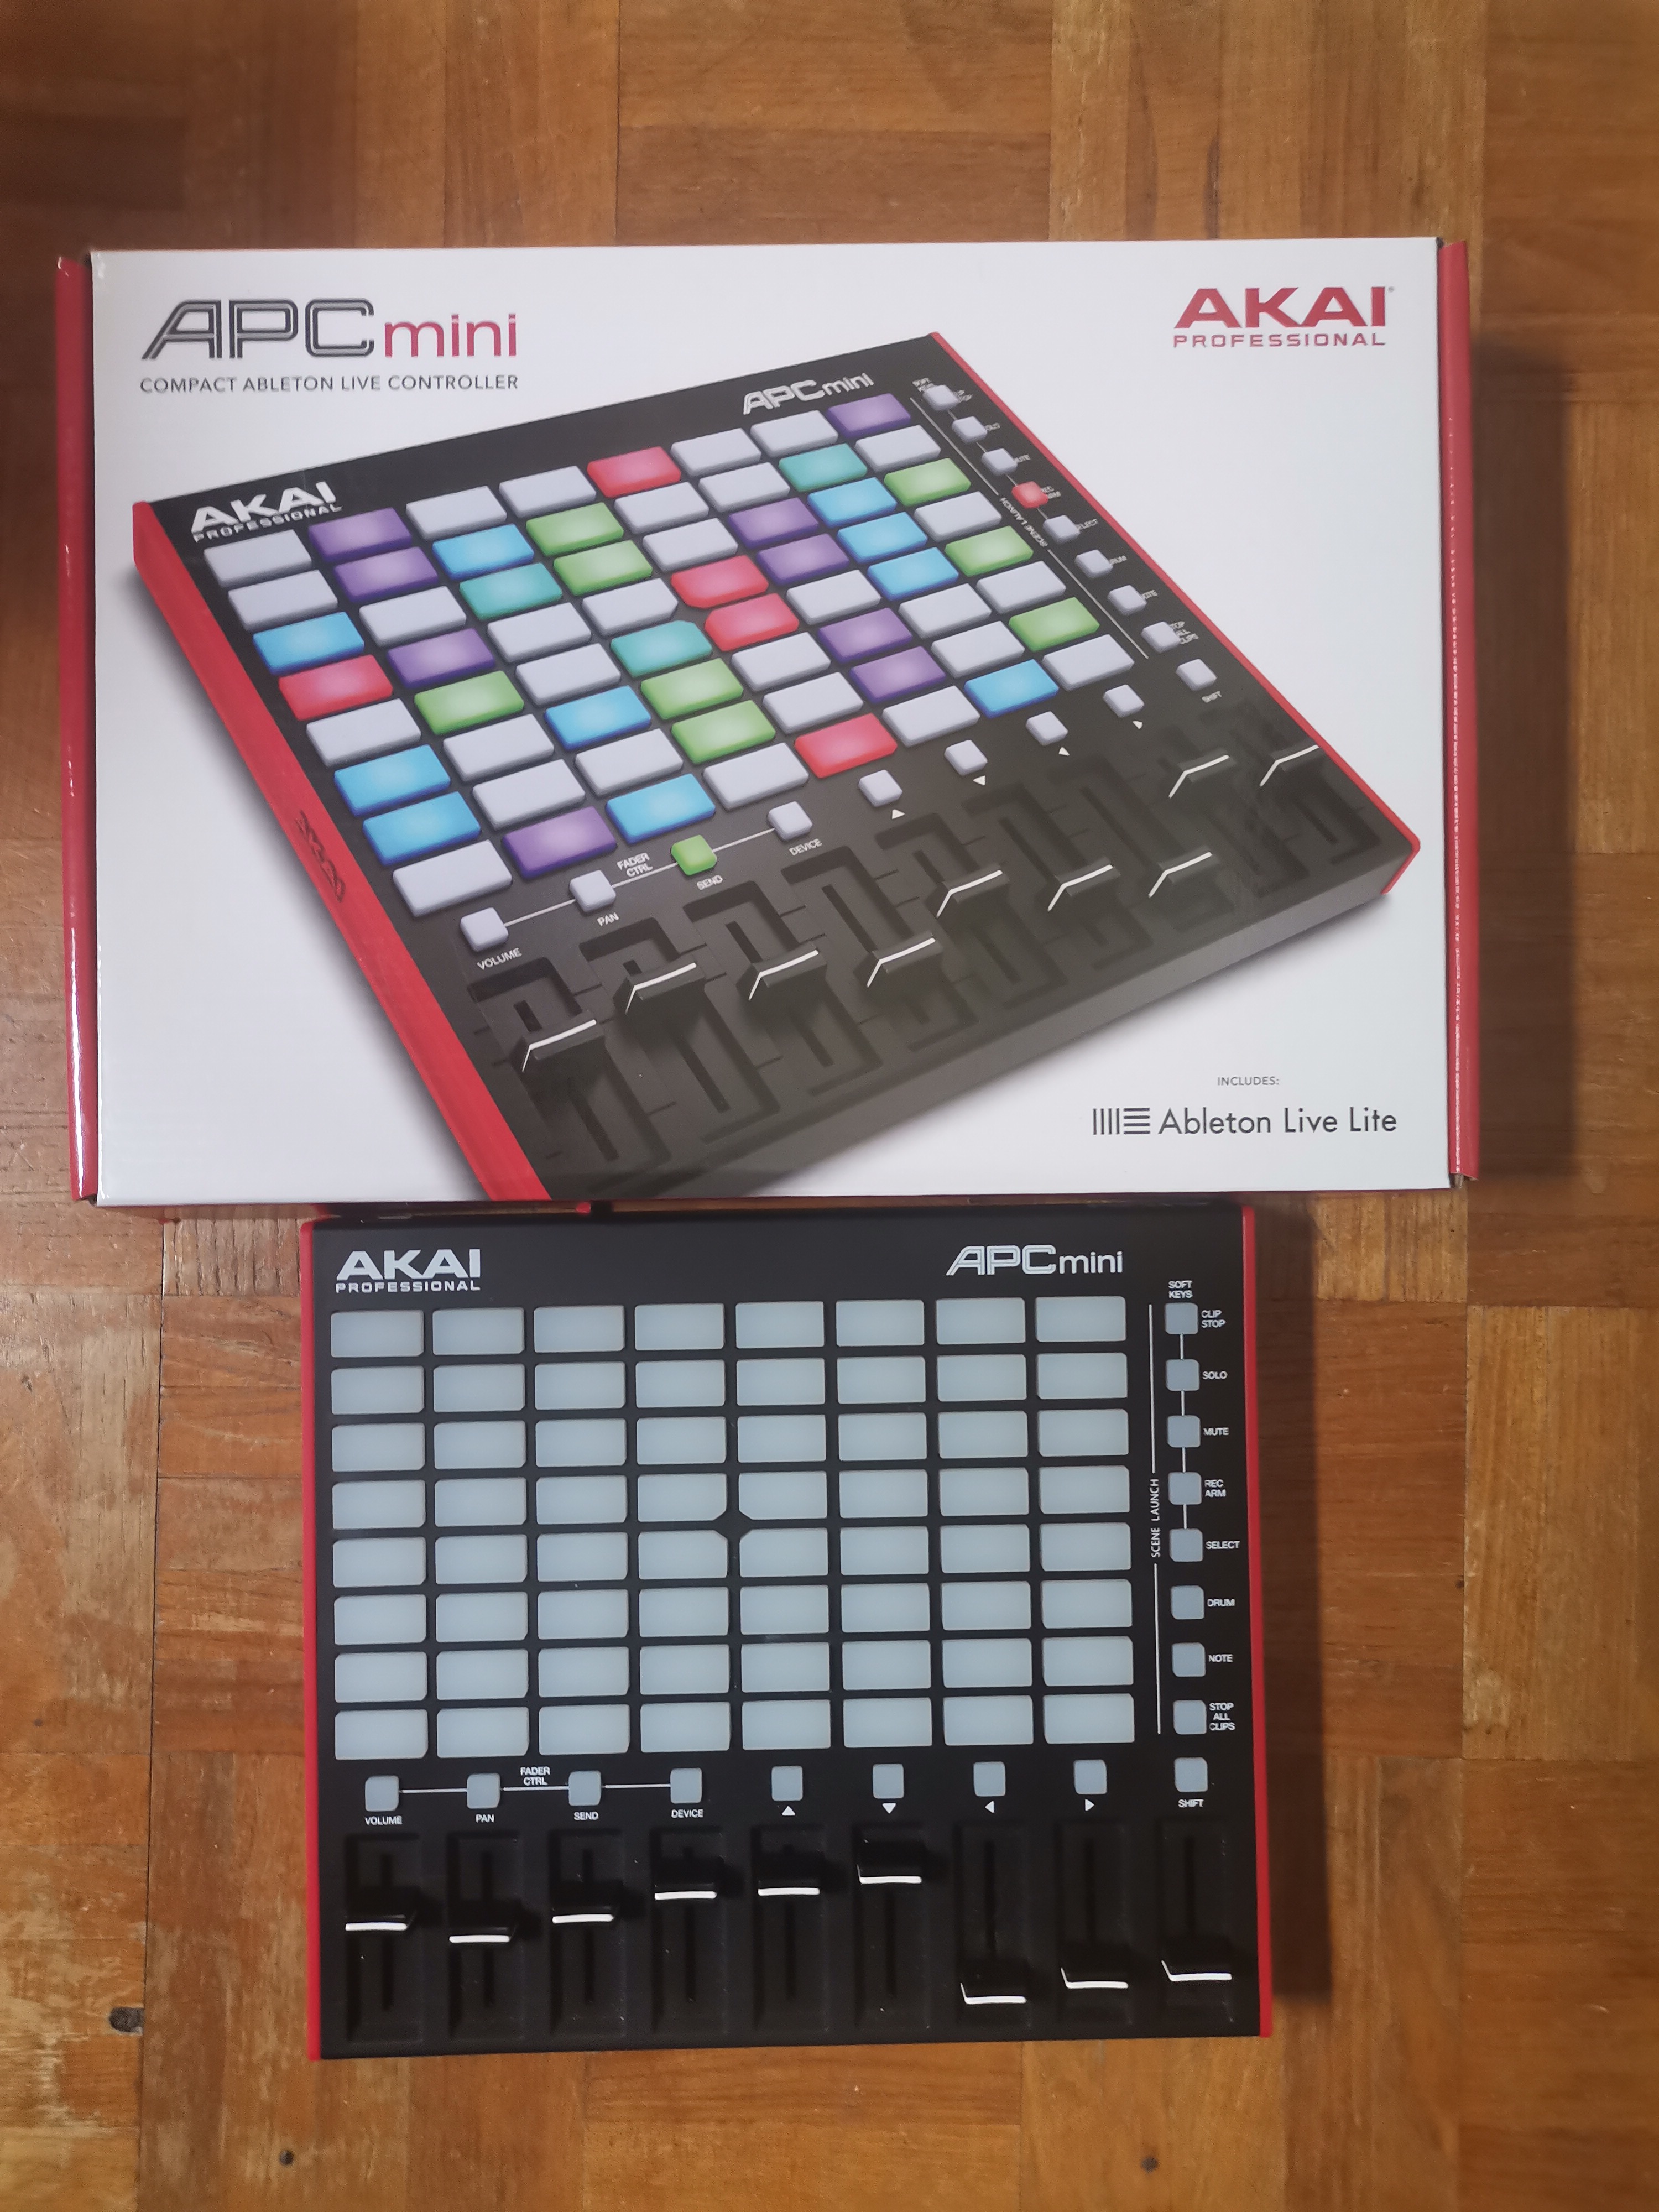 Akai Professional APC Mini MK2 Ableton Live Controller